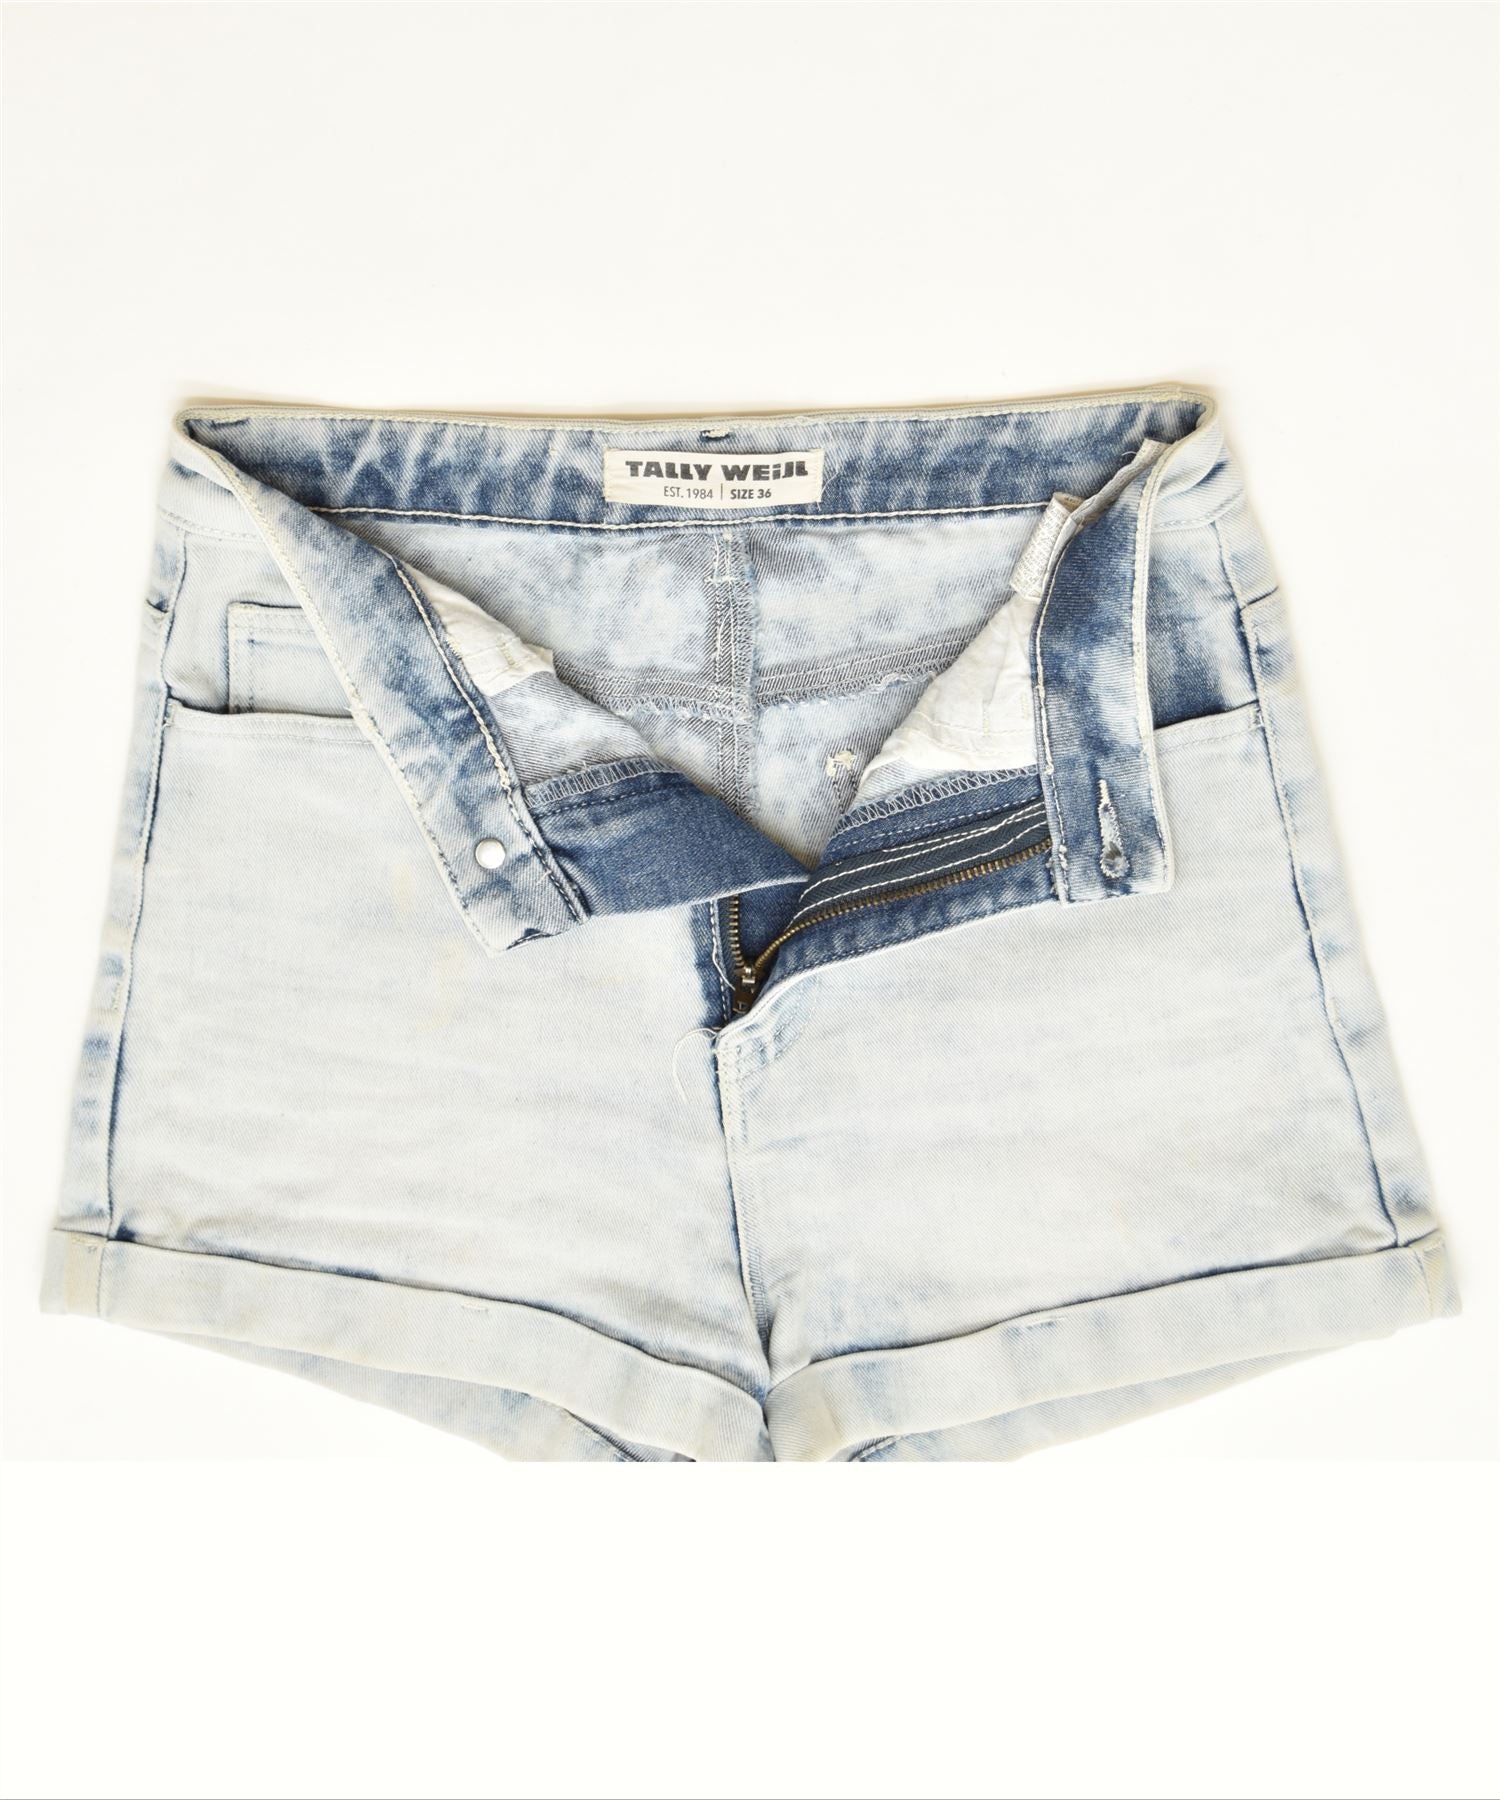 JACK WILLS Women's FINCHLEY Denim Hot Pants Shorts, Black, size S /UK 10 |  eBay